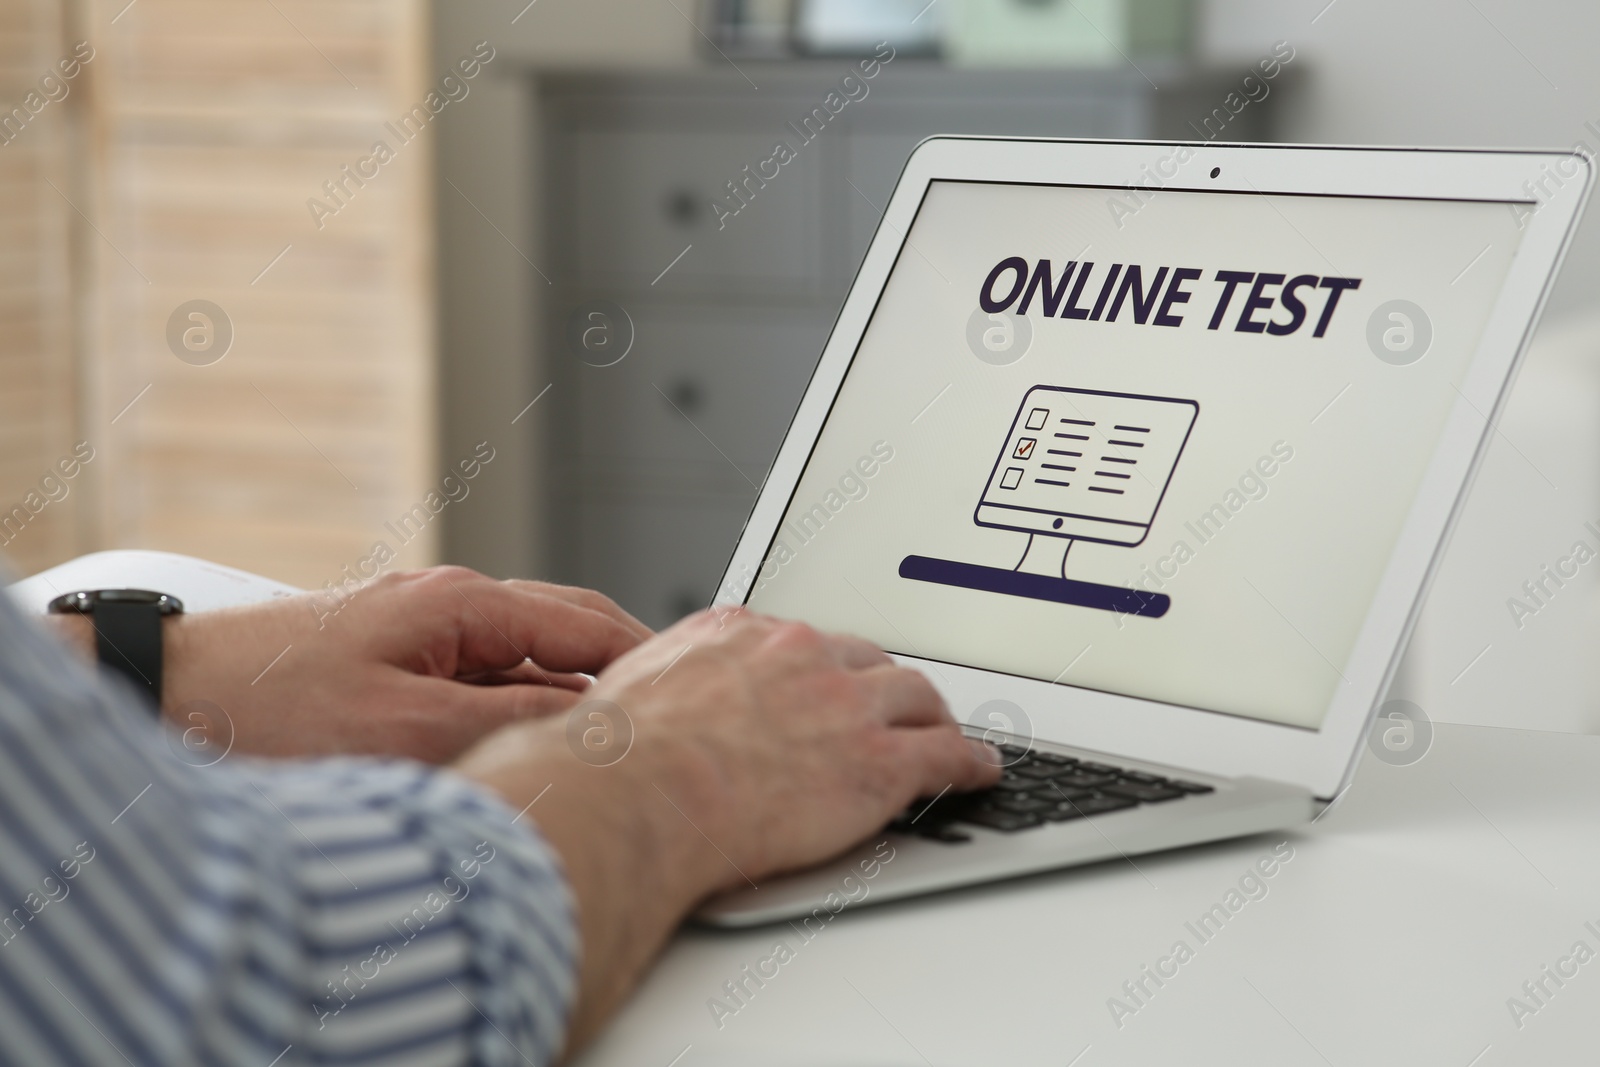 Photo of Man taking online test on laptop at desk indoors, closeup